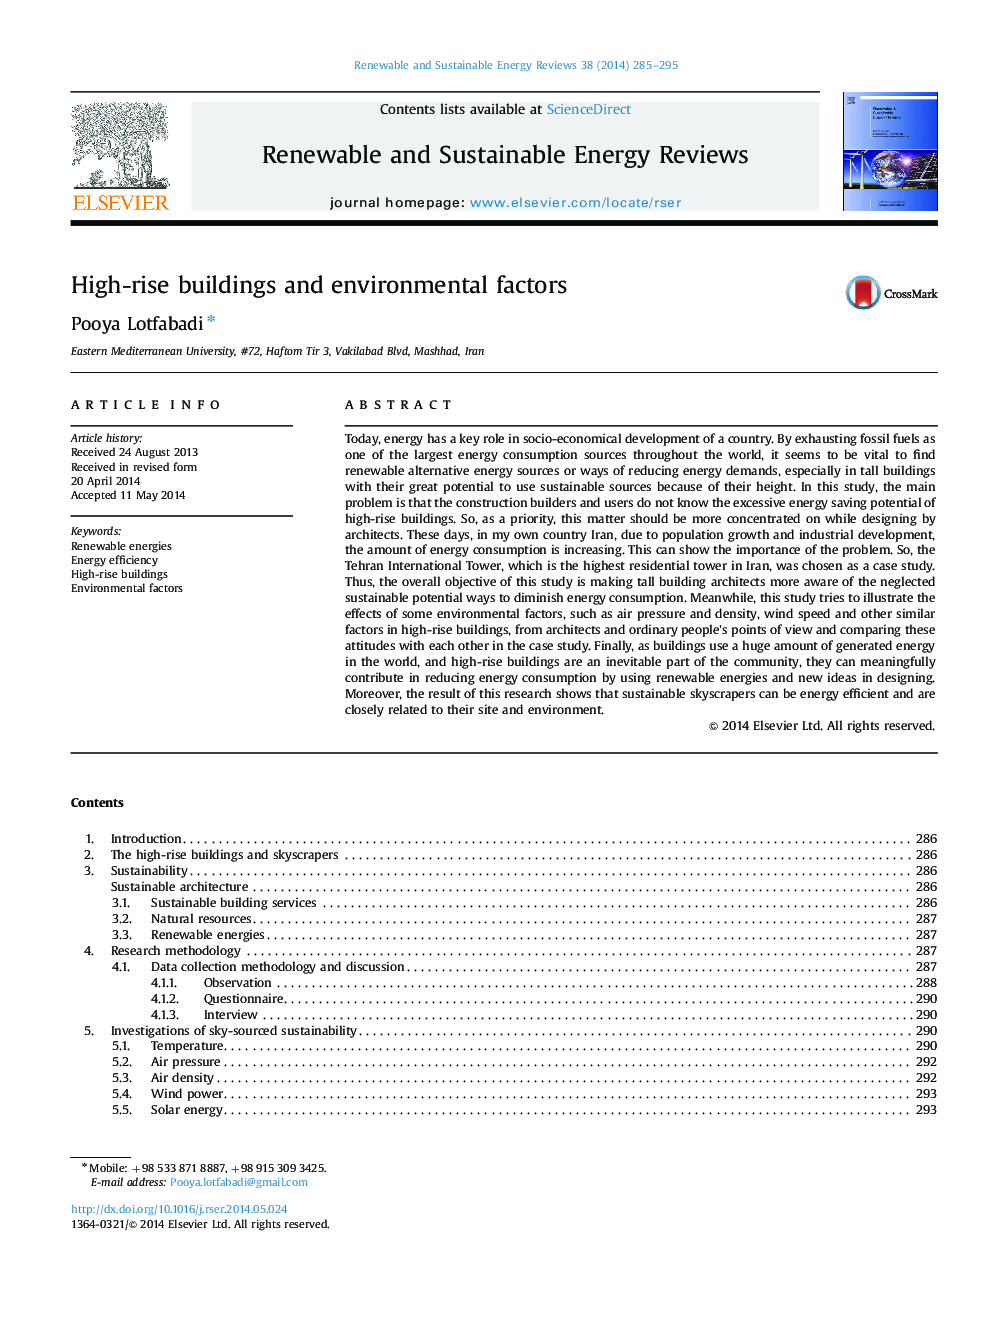 High-rise buildings and environmental factors